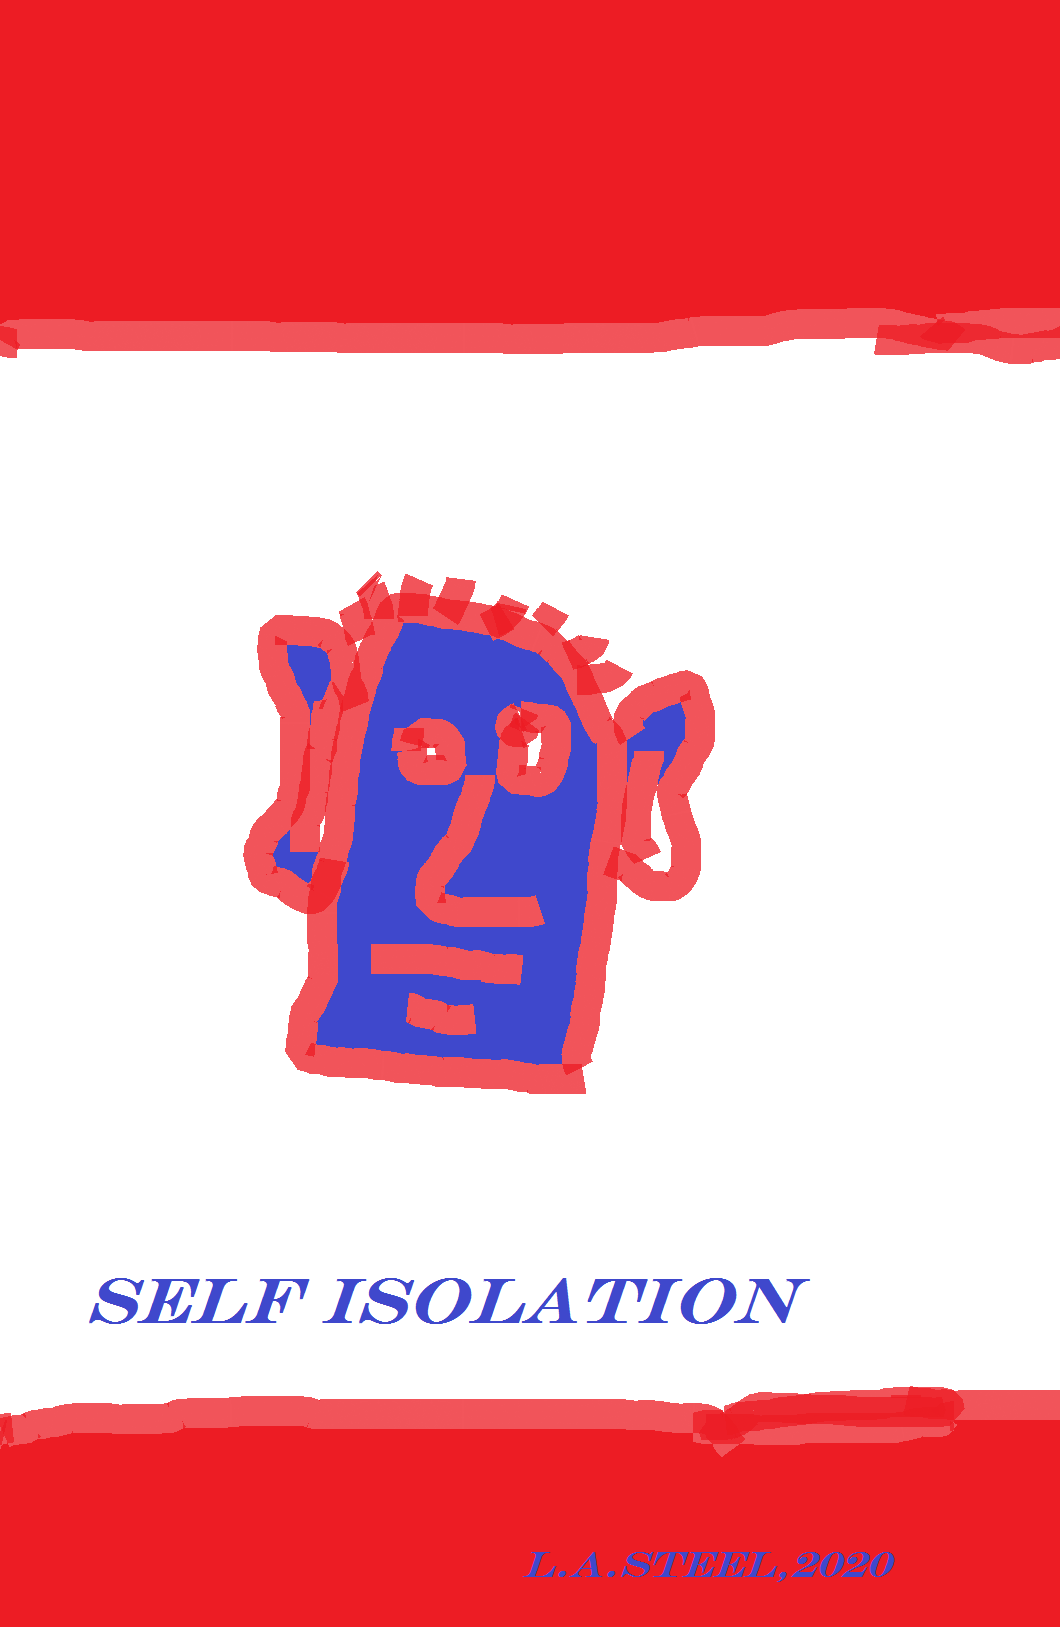 self isolation 2020